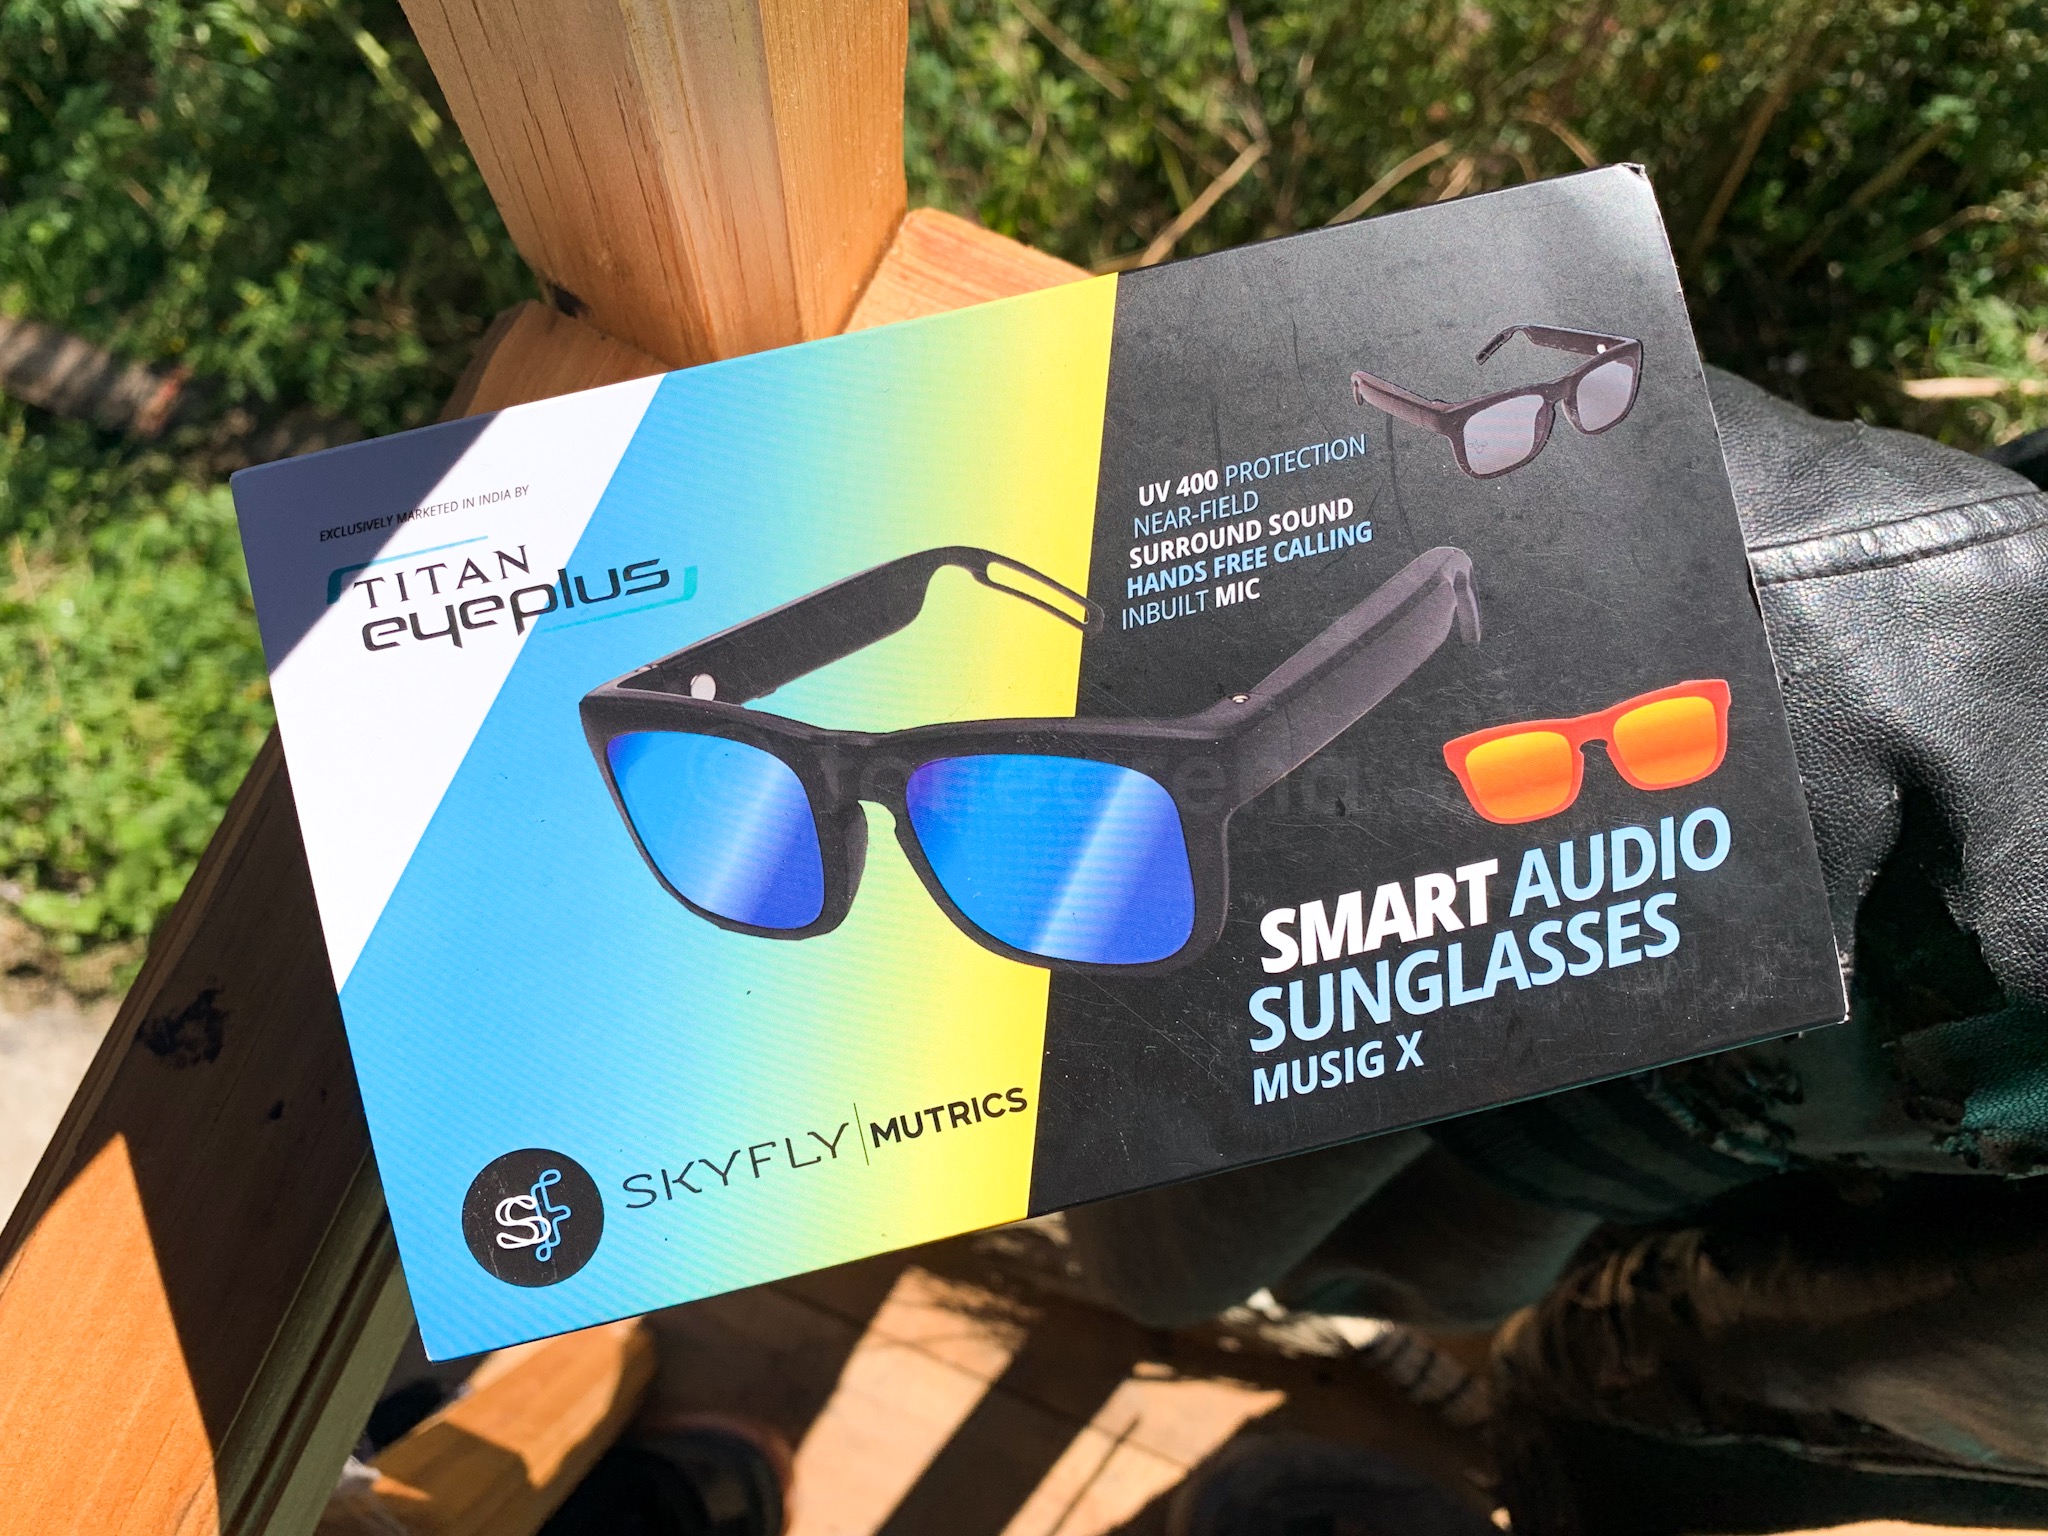 titan-eyeplus-smart-audio-bluetooth-sun-glassesIMG_7143